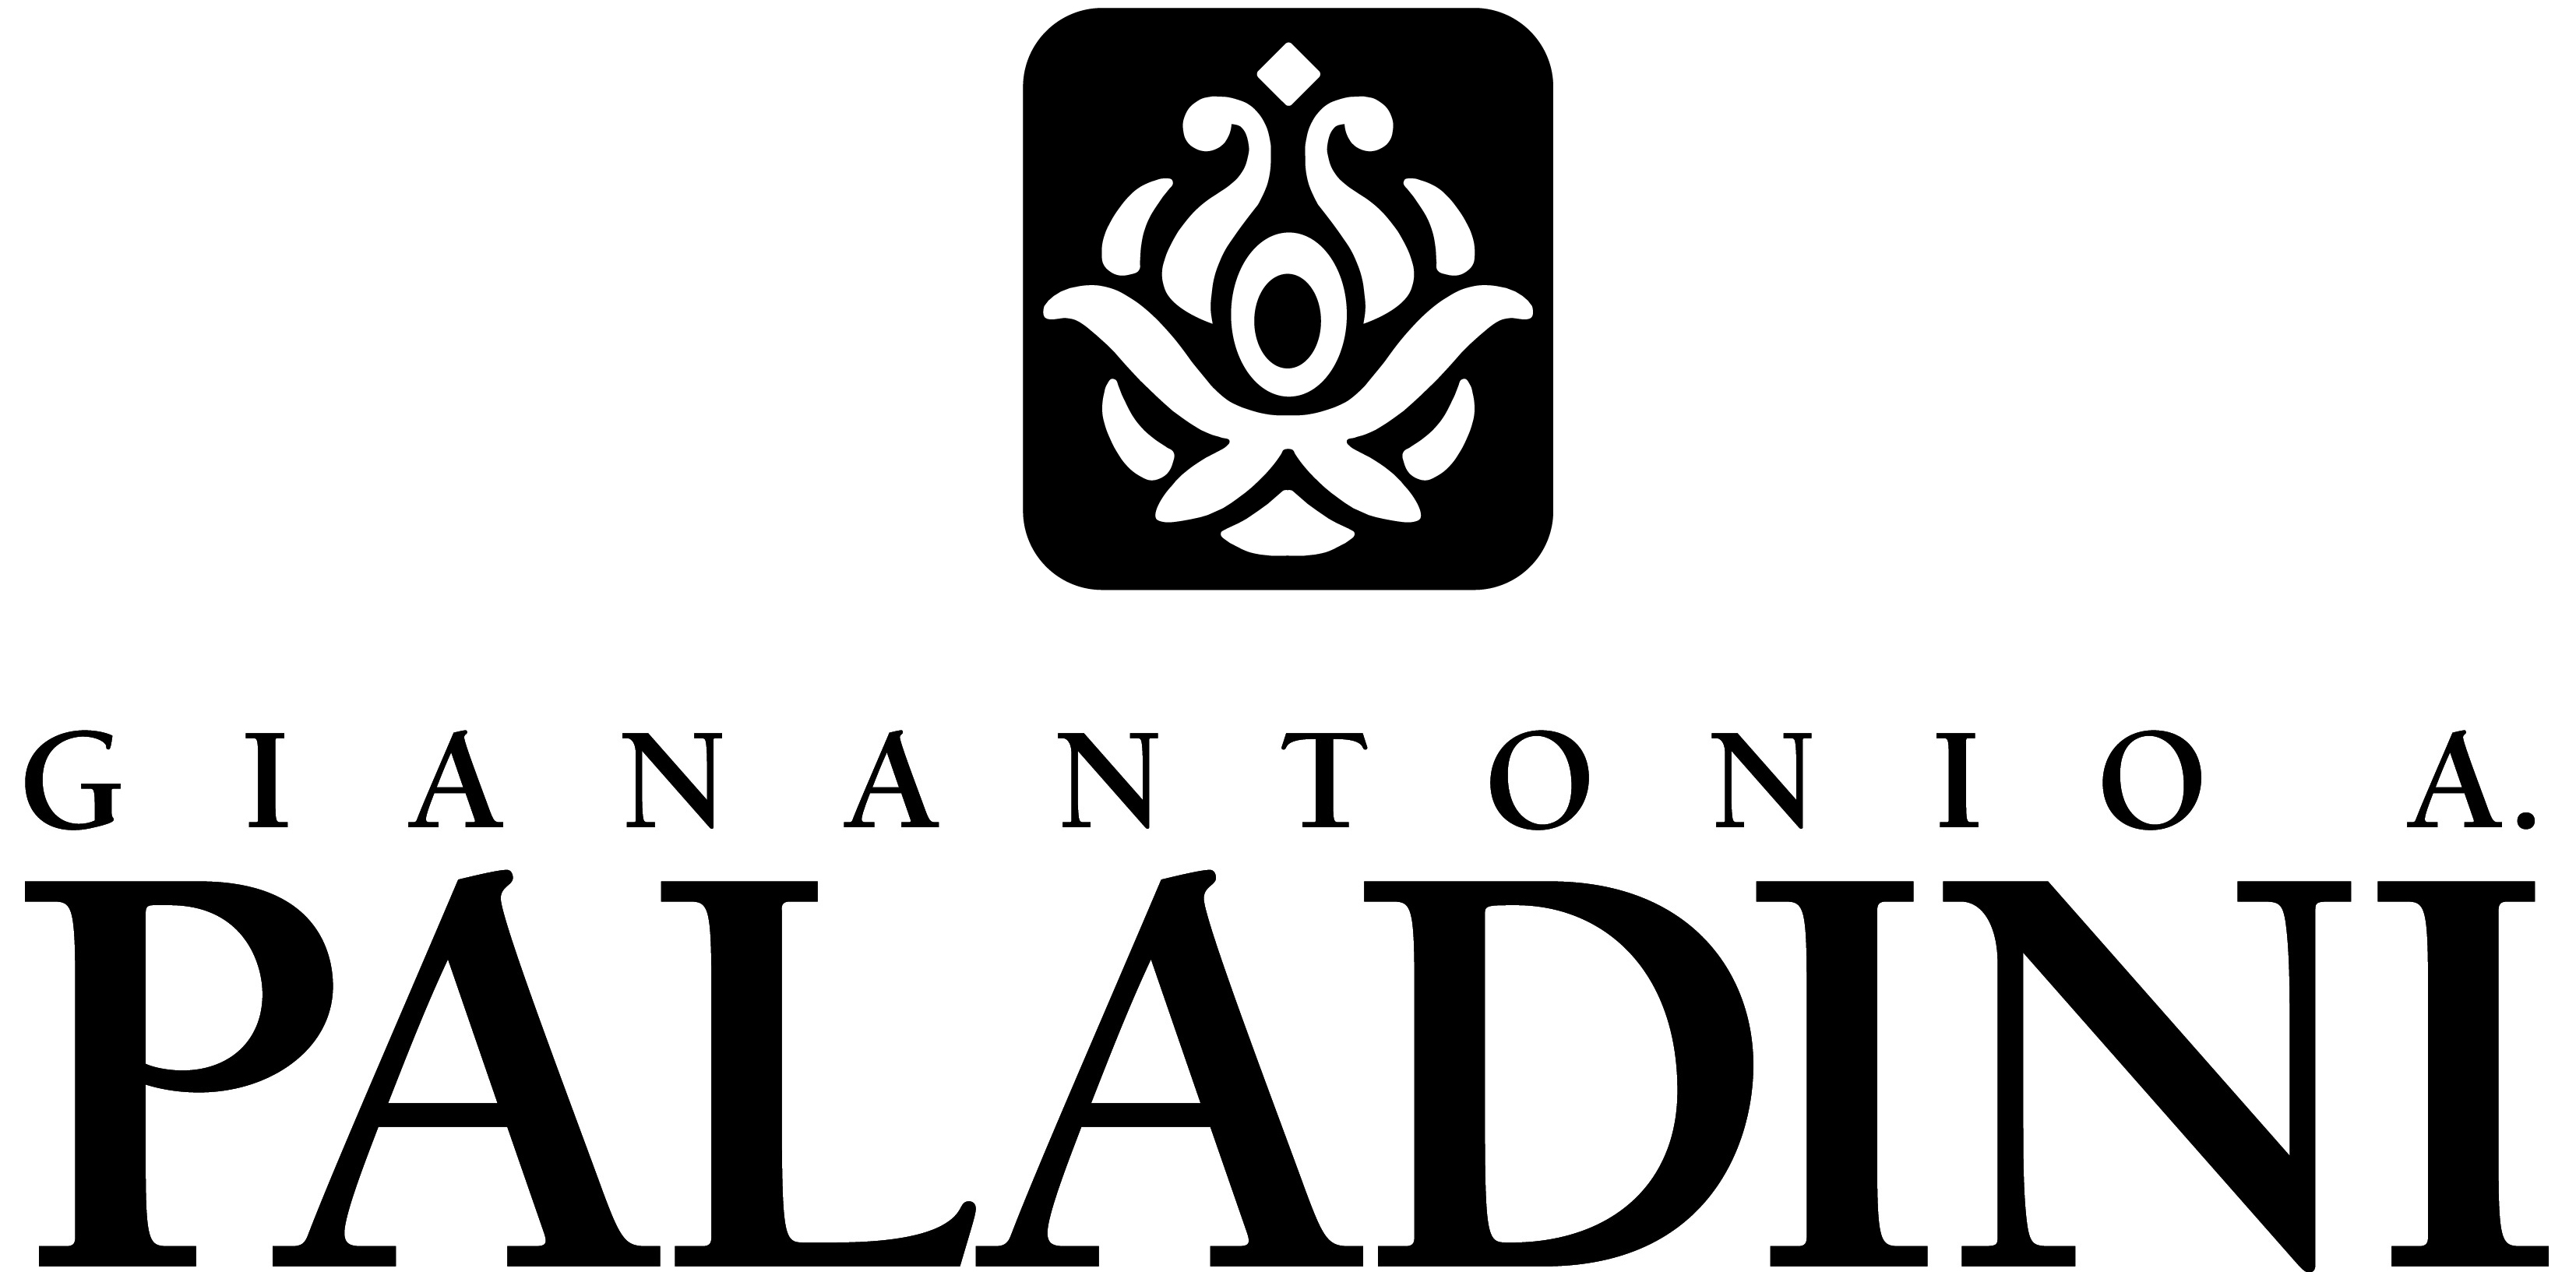 Paladini logo